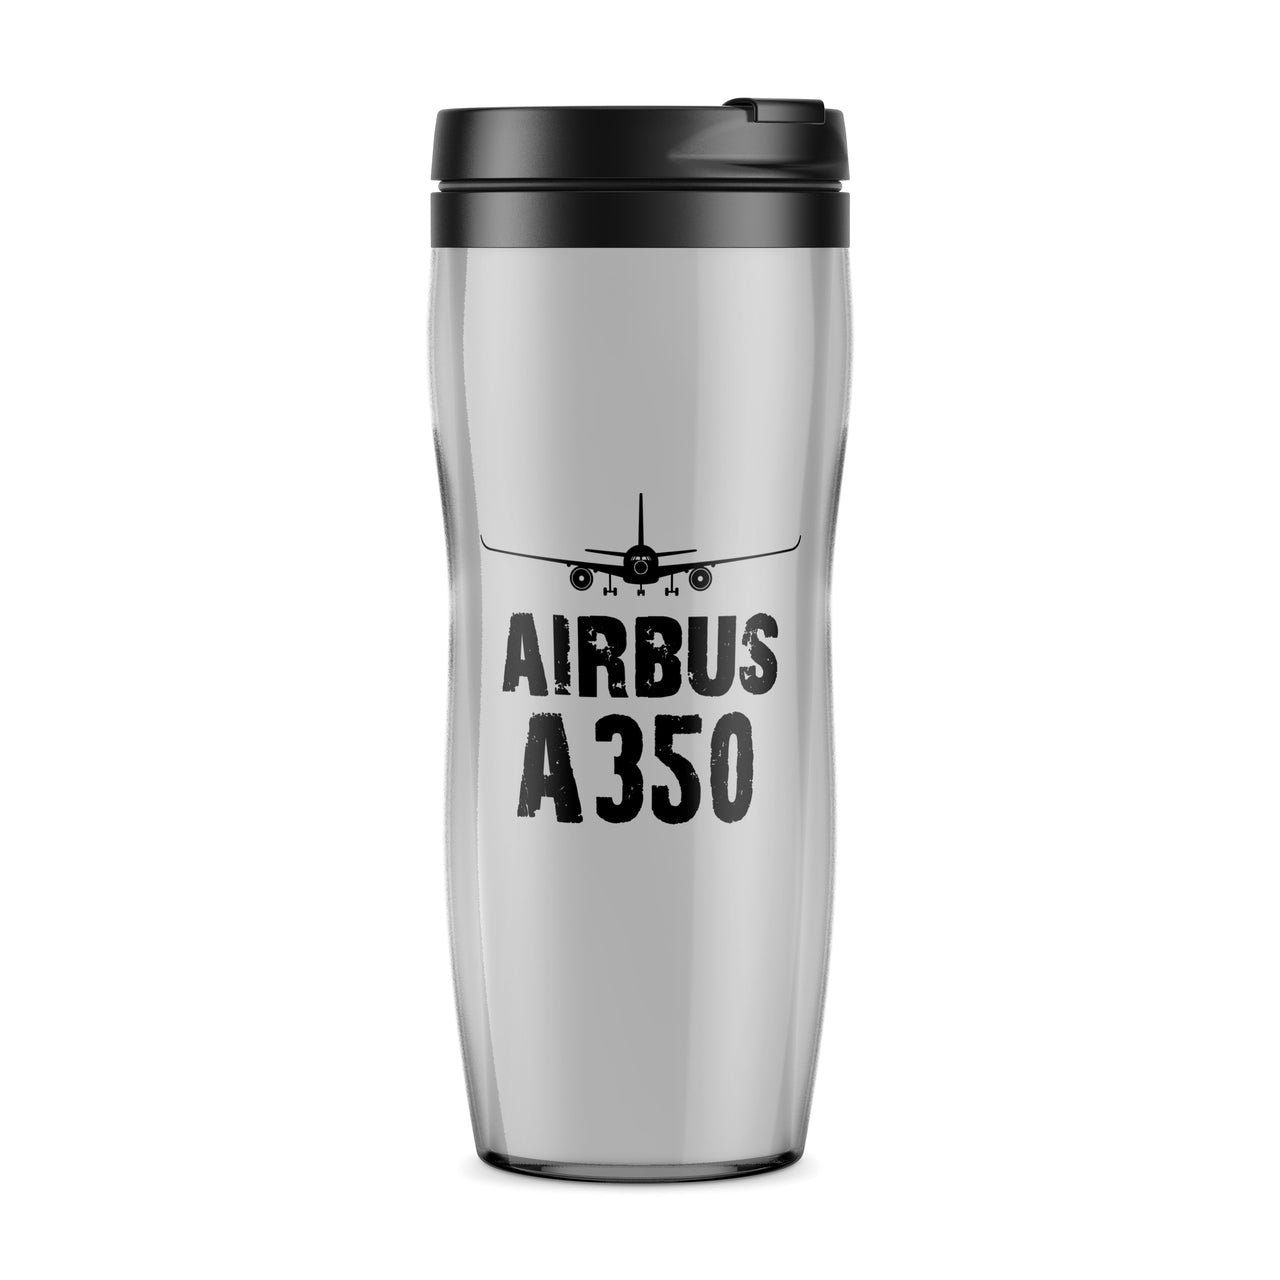 Airbus A350 & Plane Designed Travel Mugs